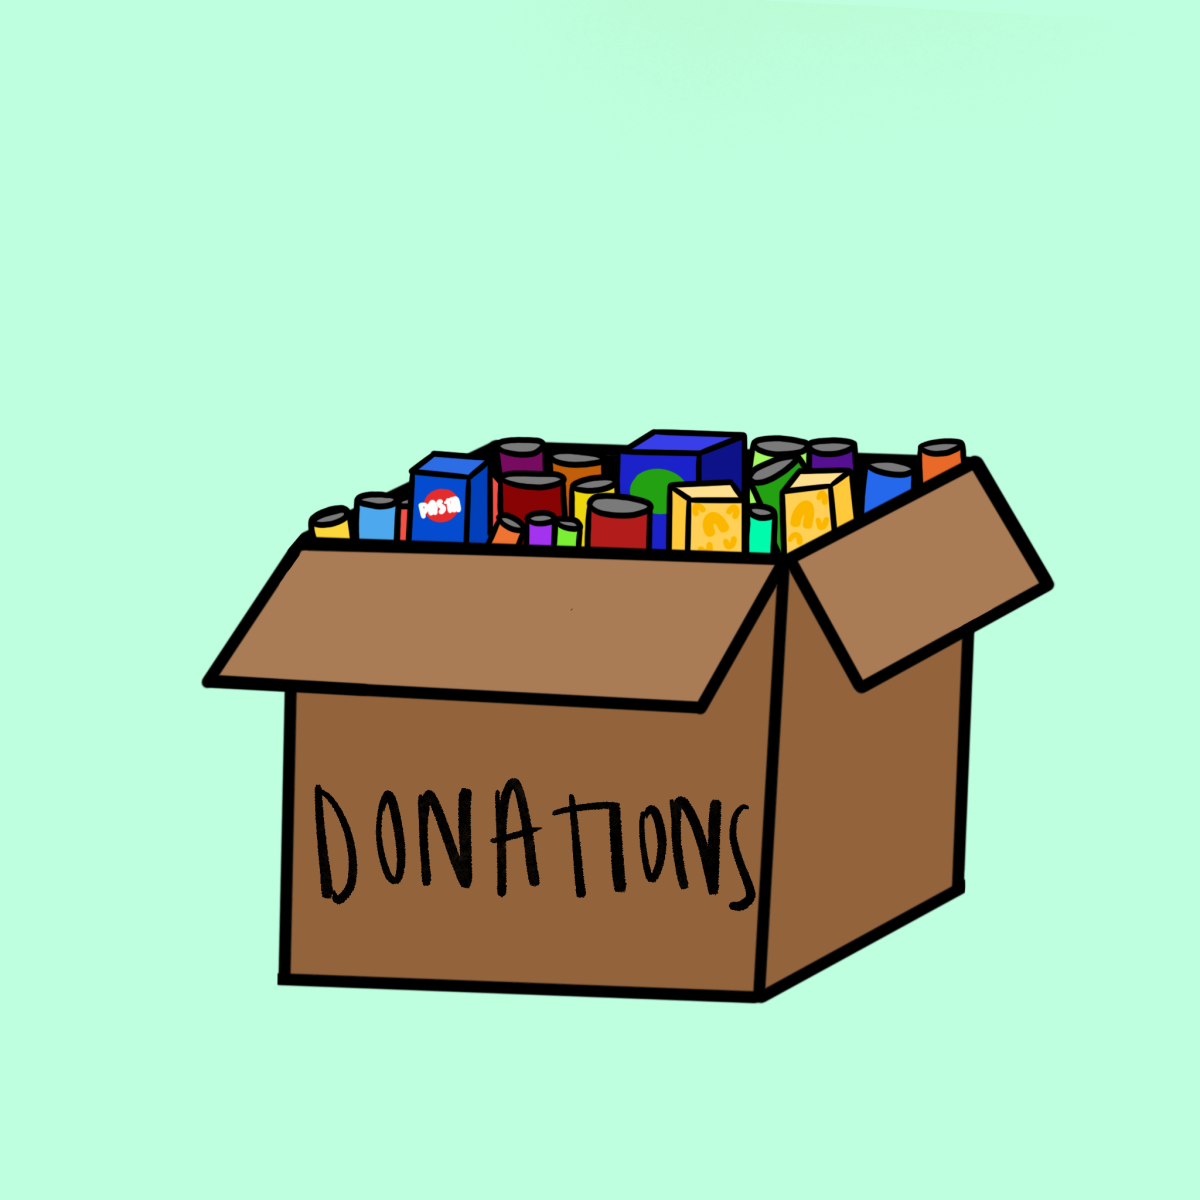 Food+bank+donations